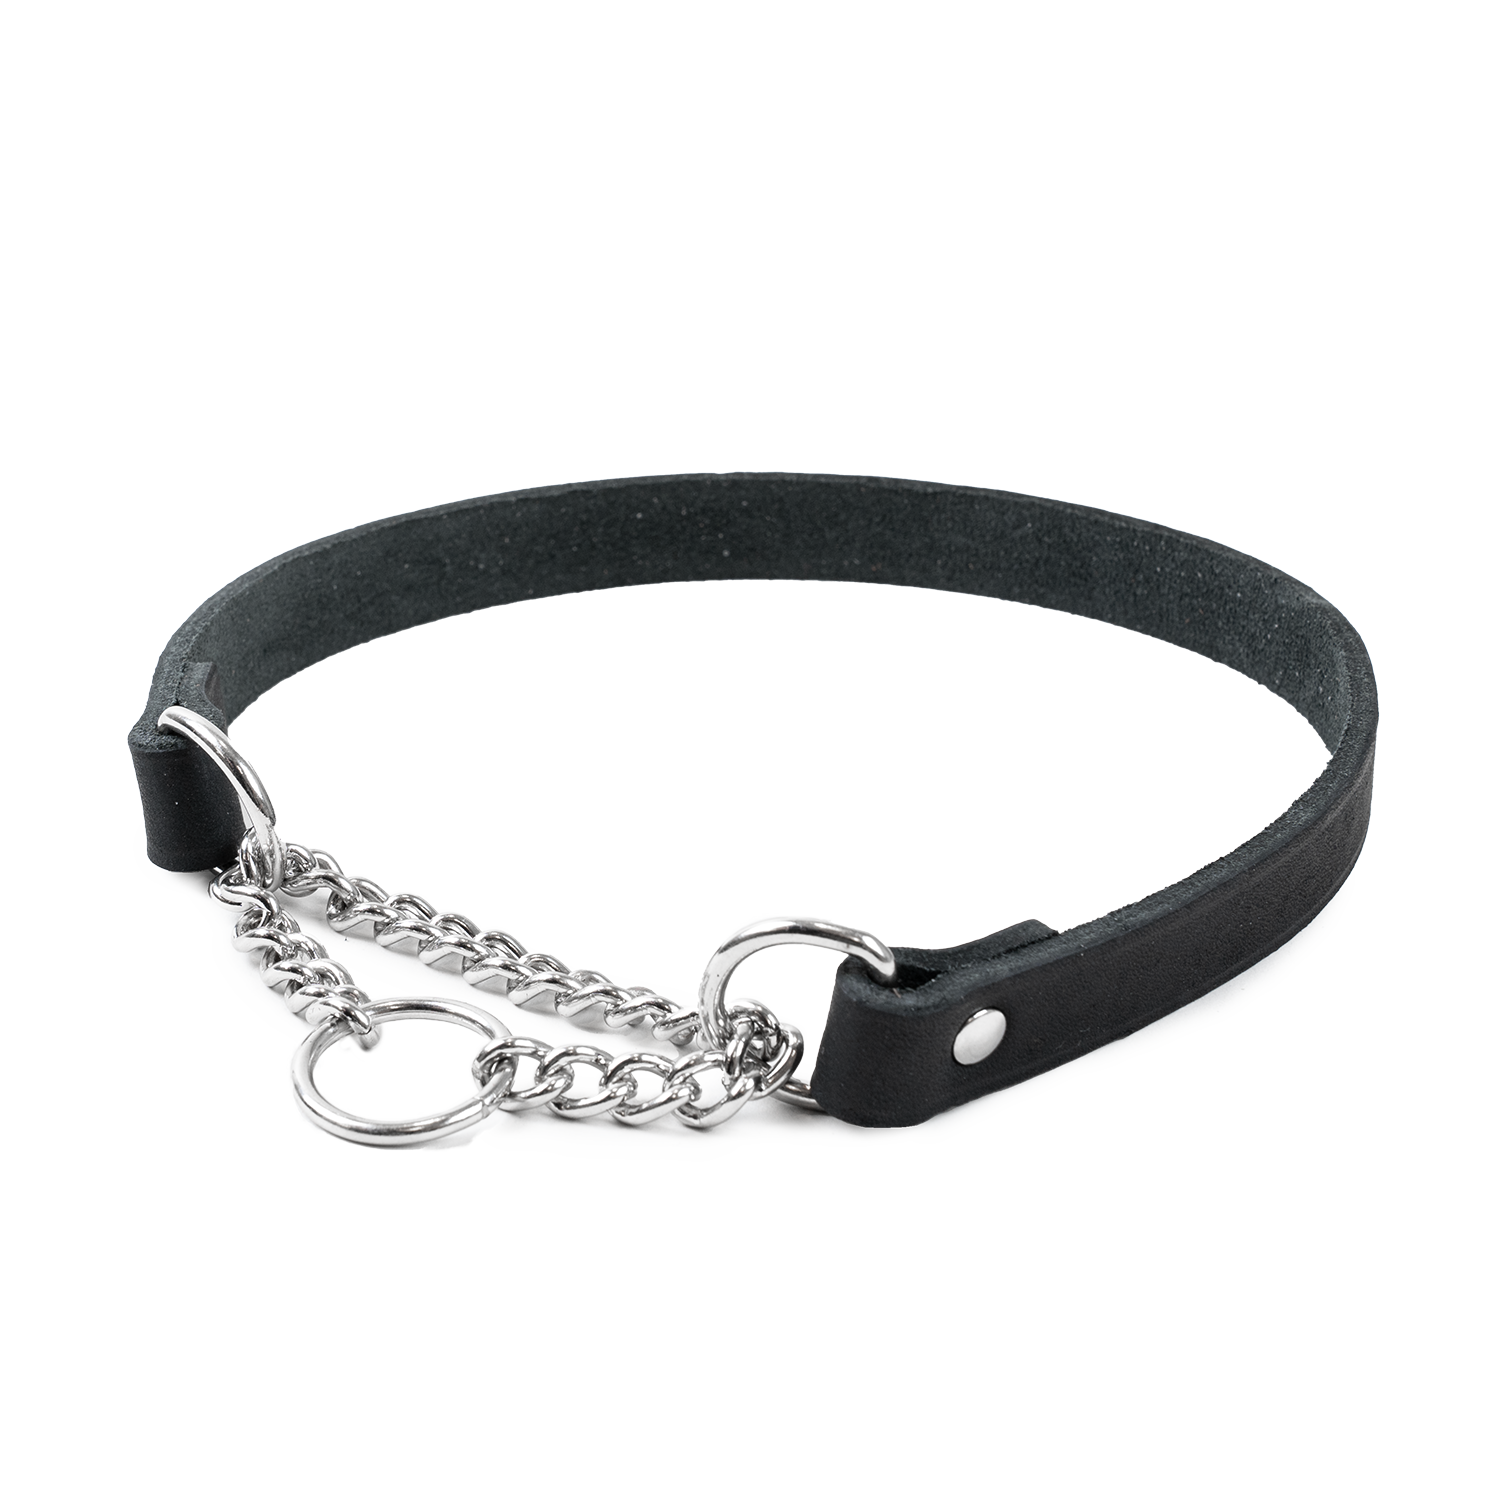 Läderhalsband Hera halvstryp Svart 18 mm x 39-49 cm - Hund - Halsband, Koppel & Sele för hund - Hundhalsband - Selected by ZOO - ZOO.se